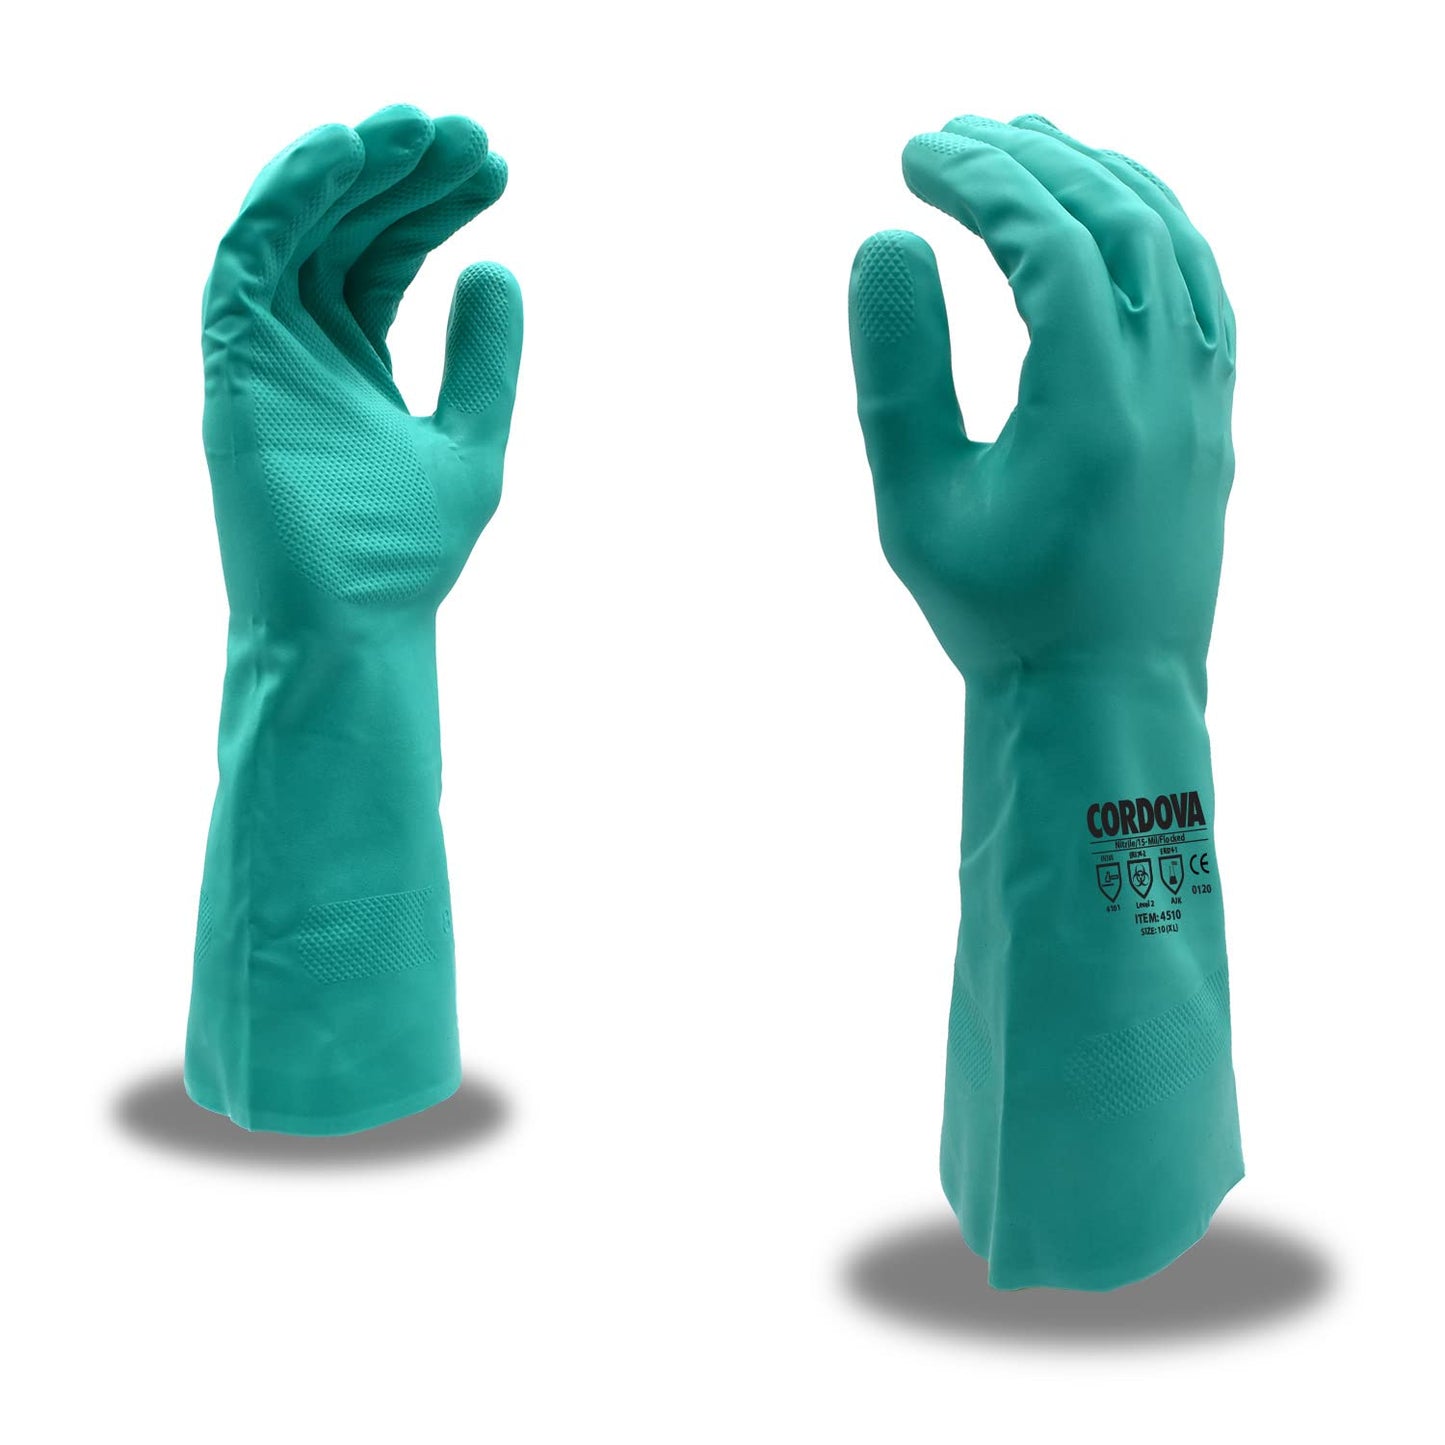 Standard Nitrile Gloves, 15-MIL, 13-Inch, 12-Pack